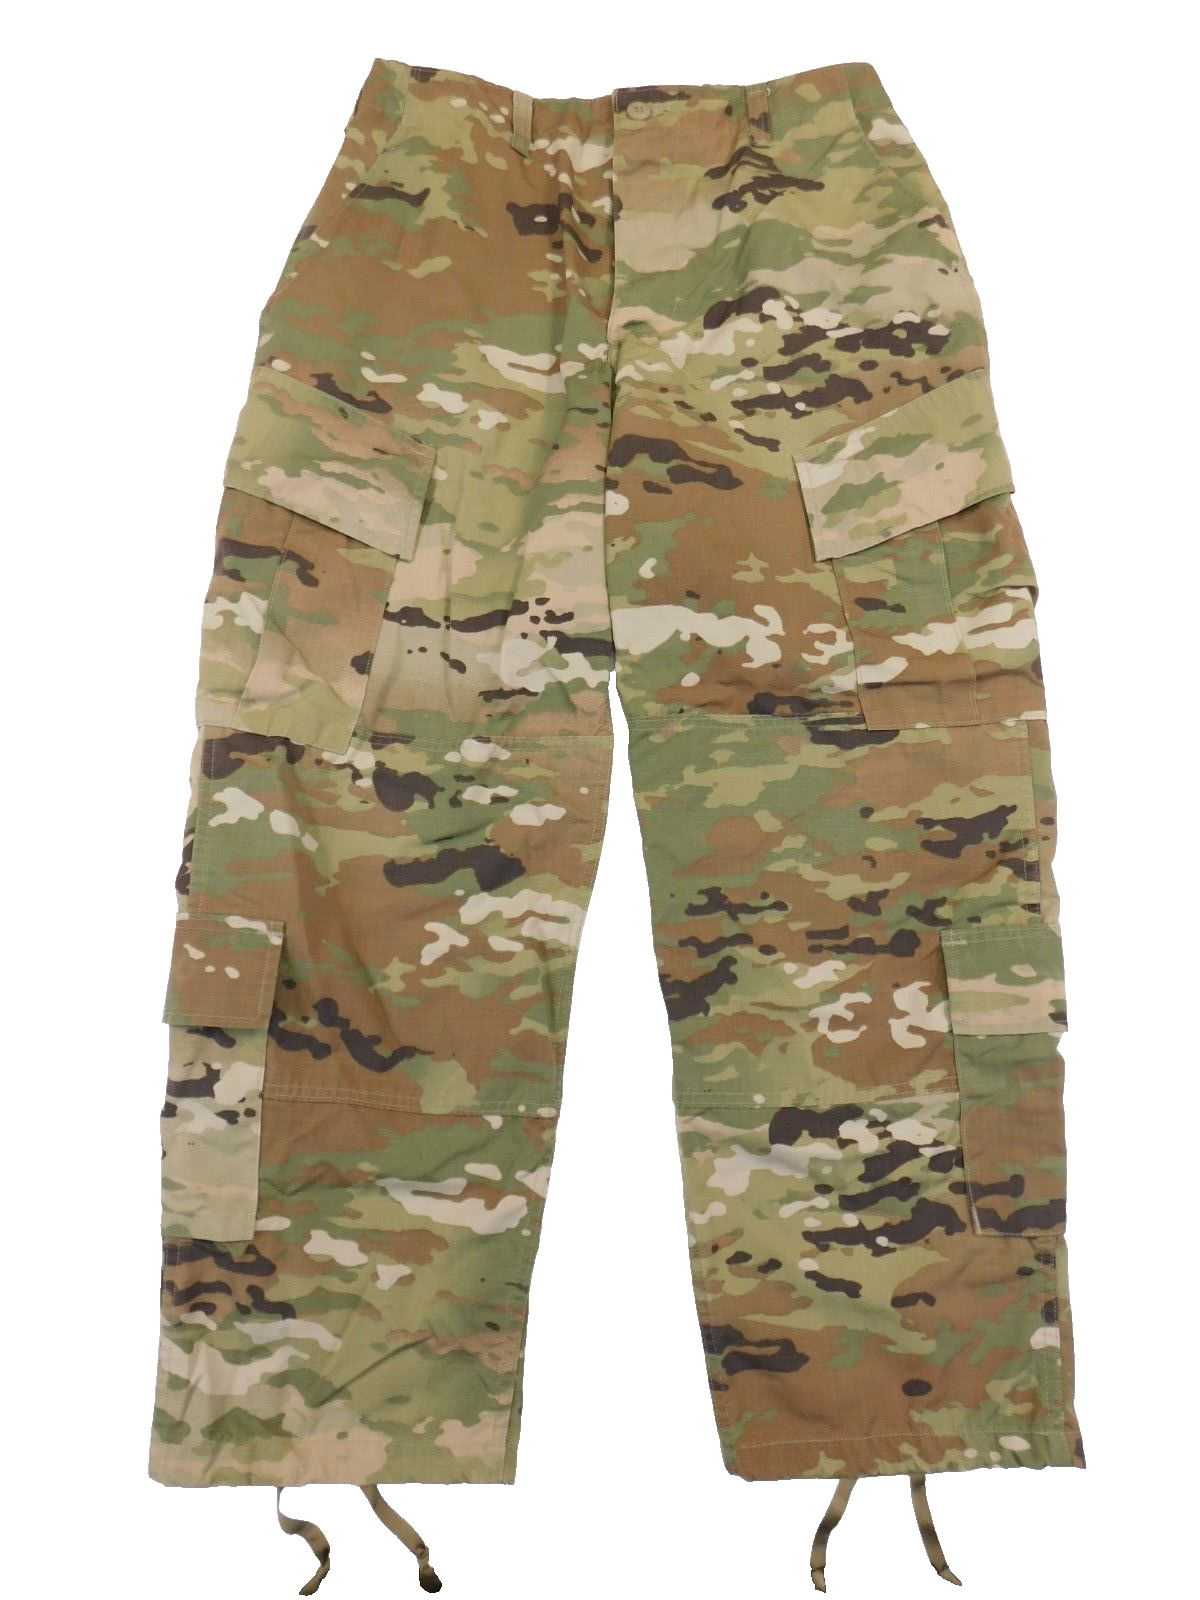 US Army AF Combat Pants Medium Regular OCP Camo Uniform Unisex Multicam Ripstop